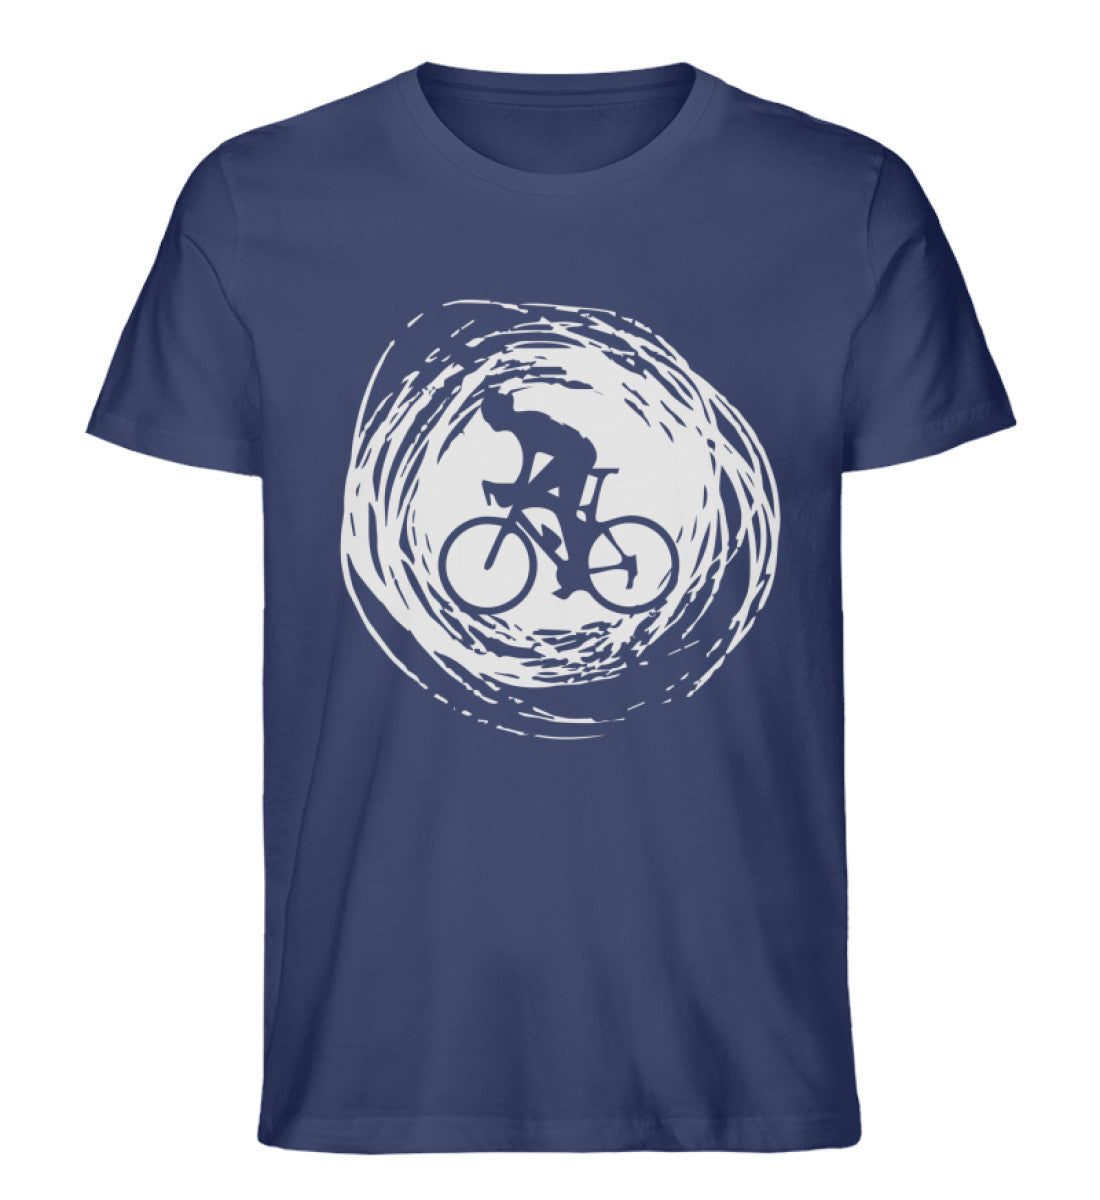 Radfahren Kreativ - Herren Organic T-Shirt fahrrad Navyblau